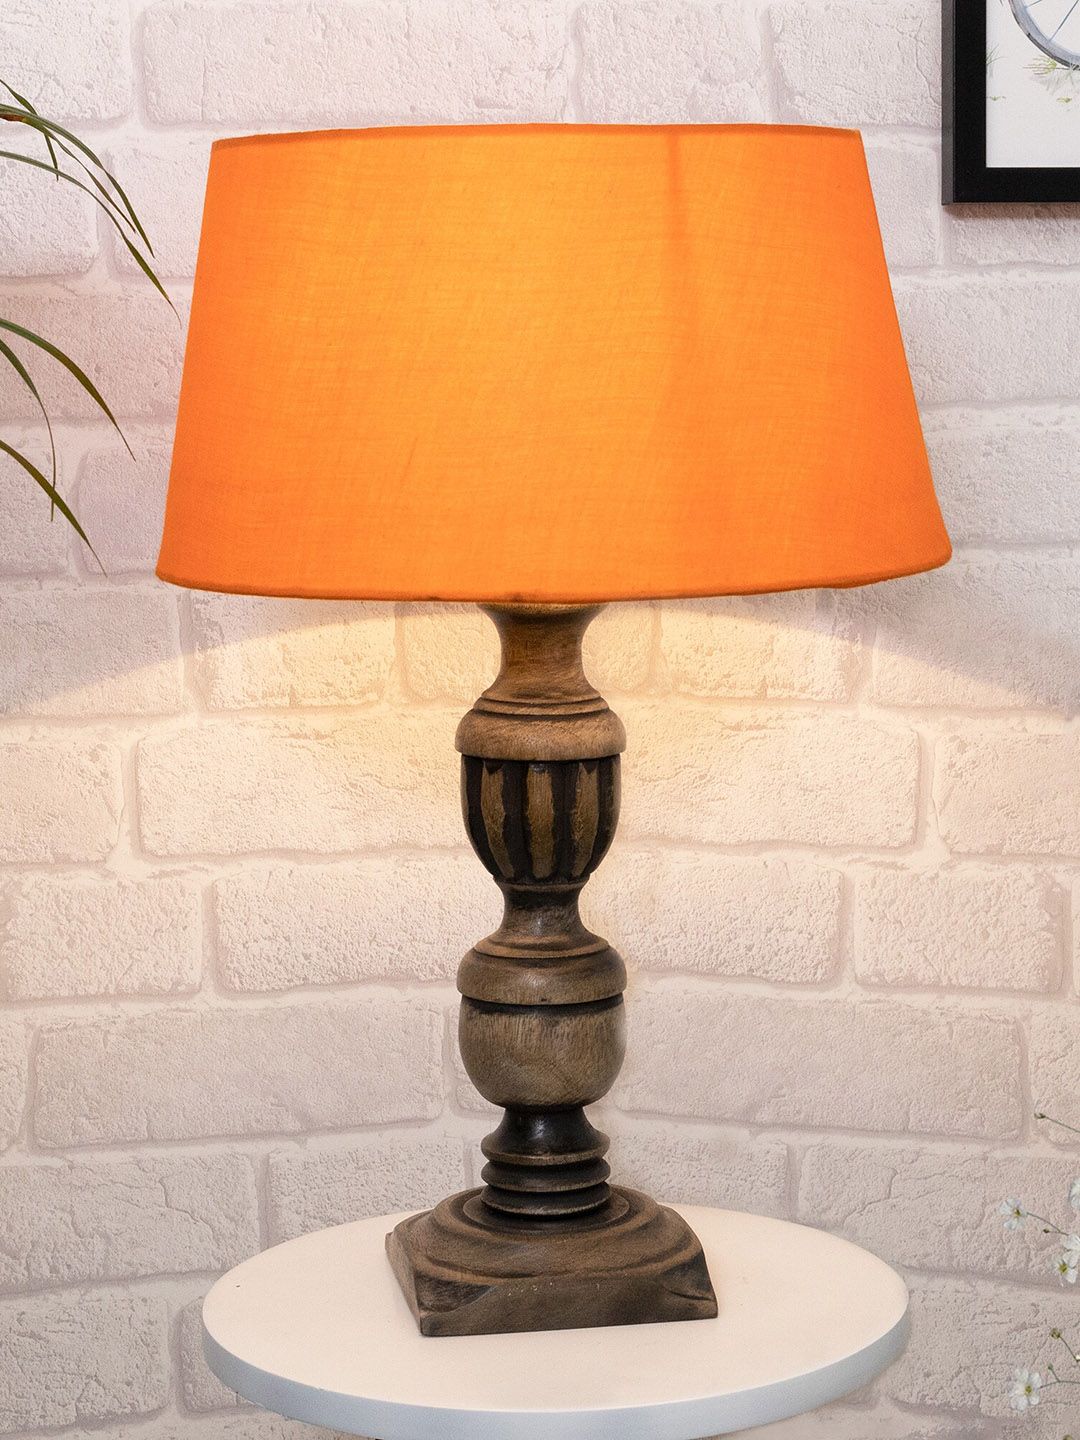 Homesake Orange Table Lamp with Shade Price in India